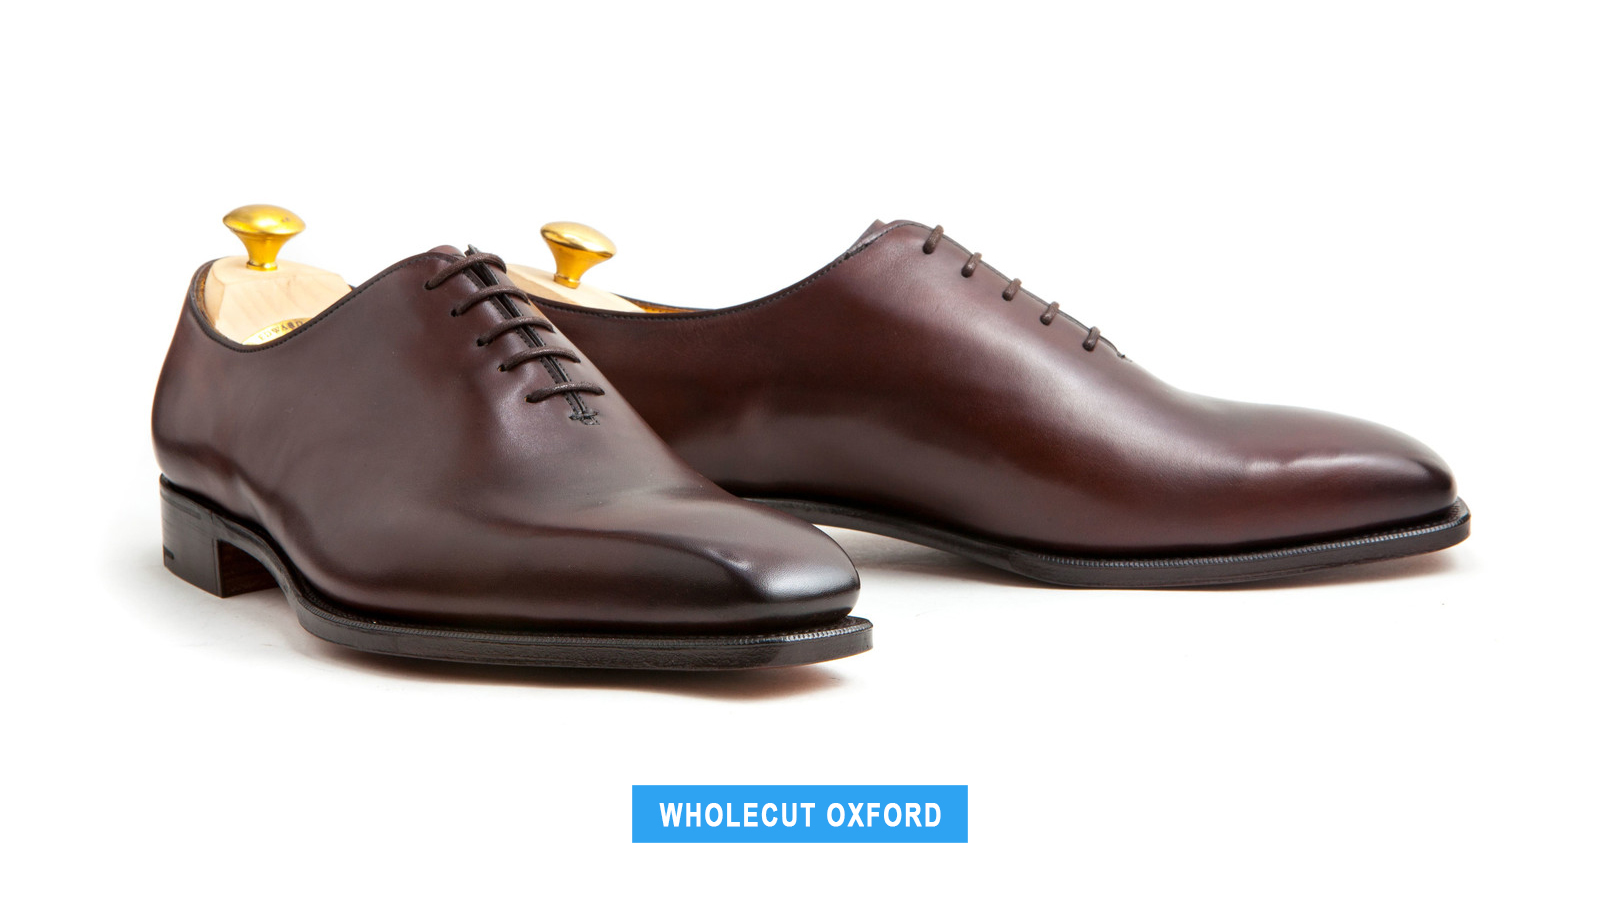 wholecut Oxford dress shoes style